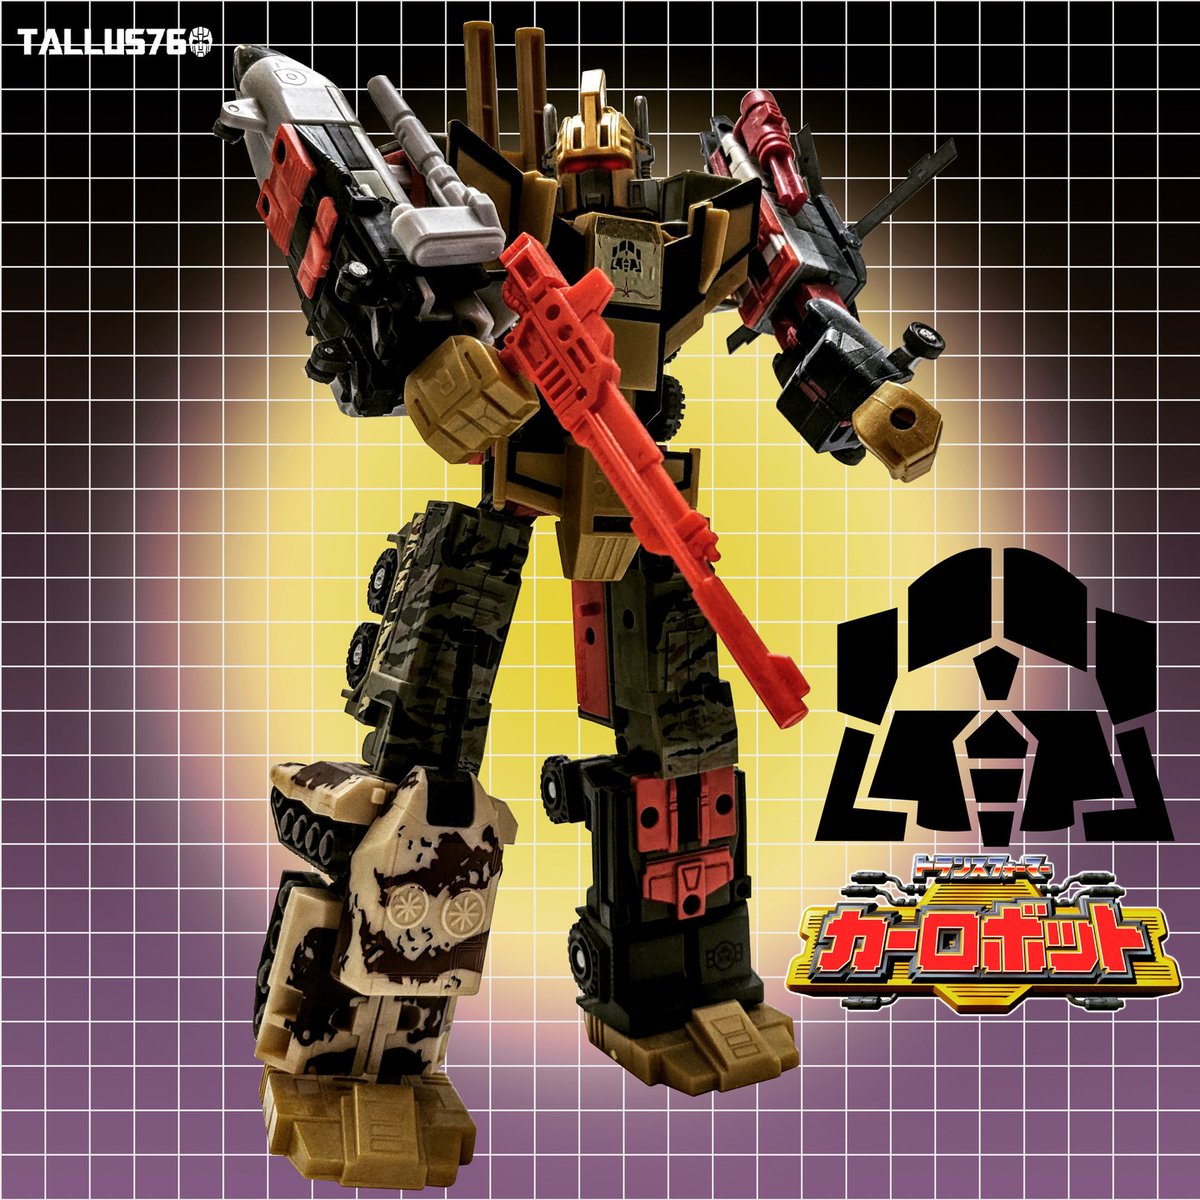 Takara Transformers Baldigus

#Baldigus #takaratomy #actionfigures #carrobots